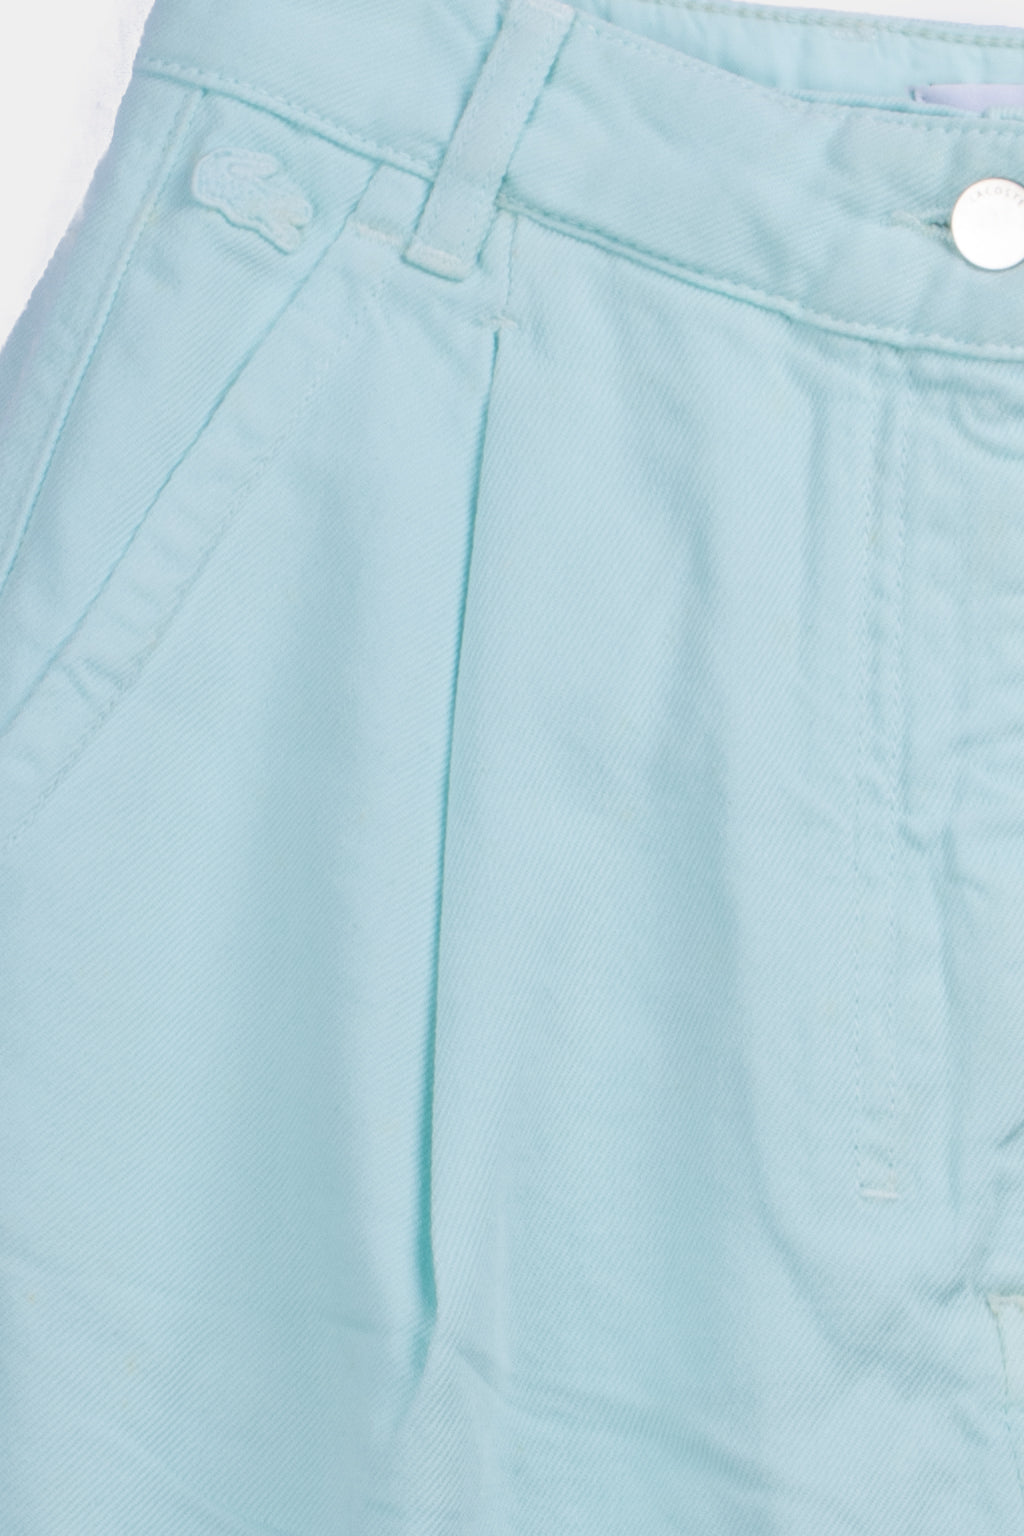 Lacoste - Bermuda Shorts